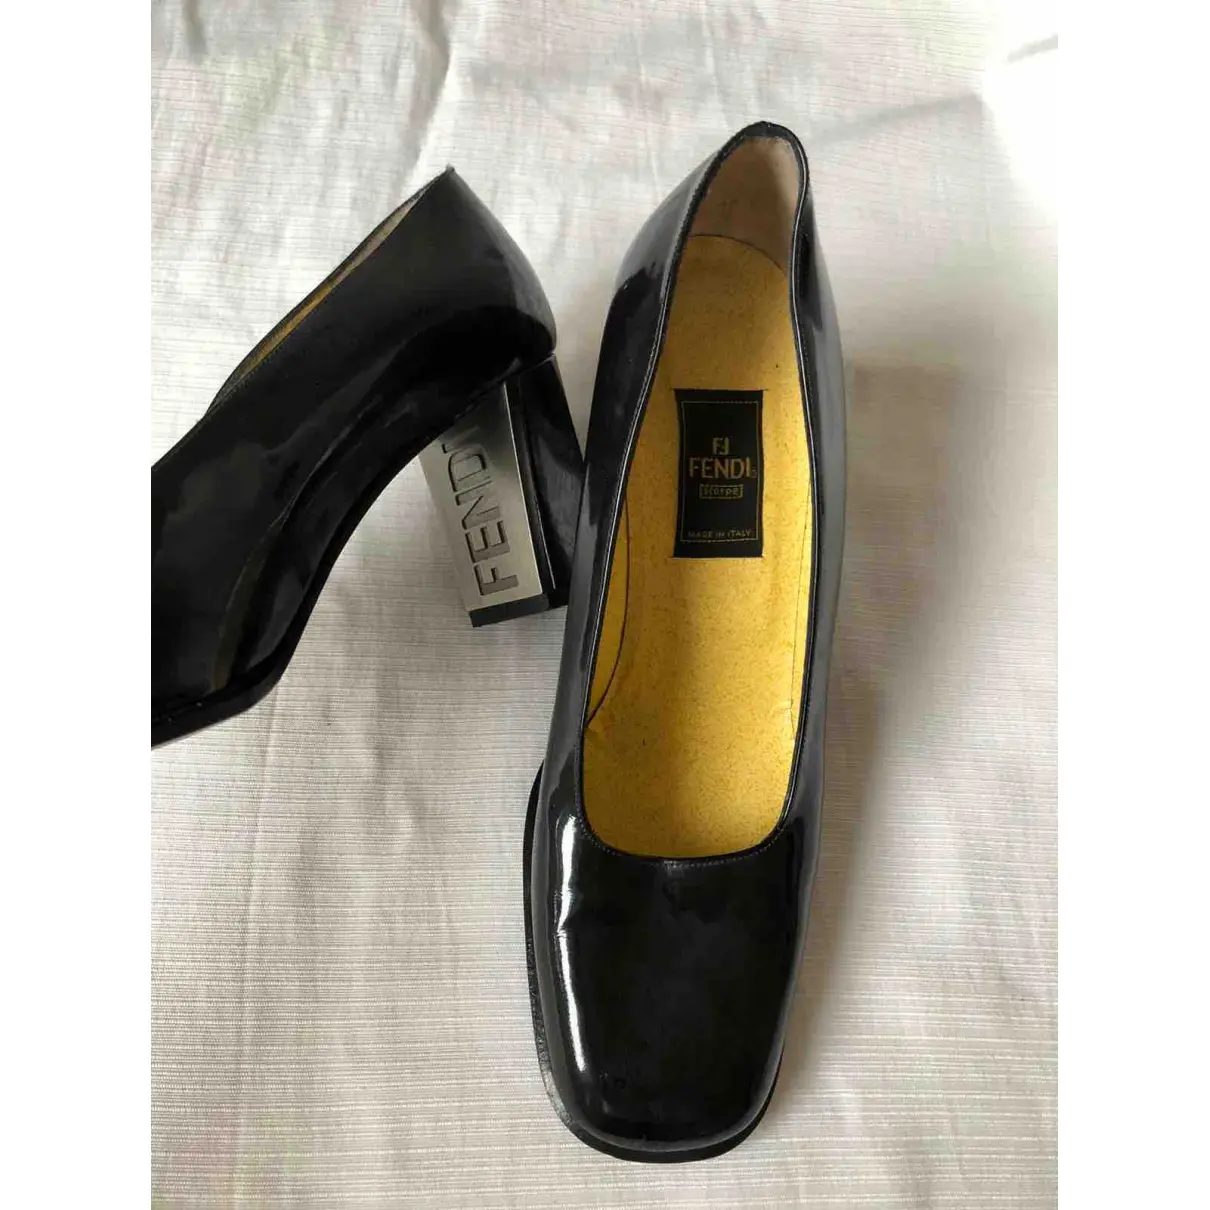 Buy Fendi Patent leather heels online - Vintage